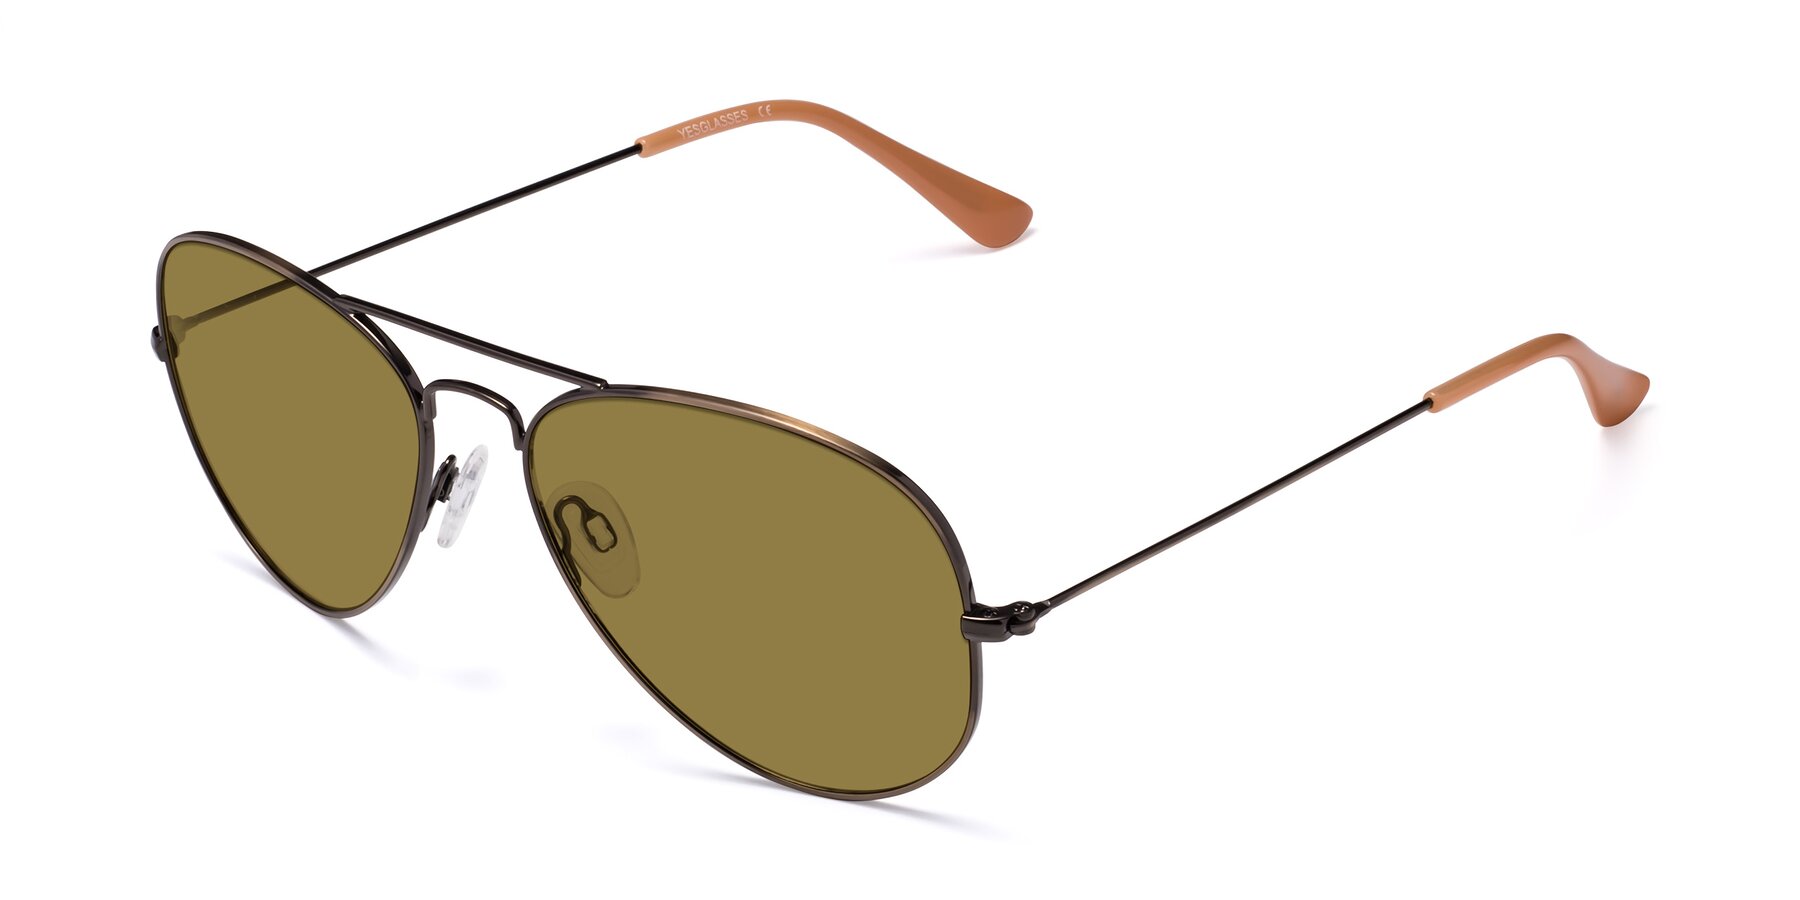 Polarized sunglasses with case KY3113偏光: описание, характеристики, фото,  отзывы